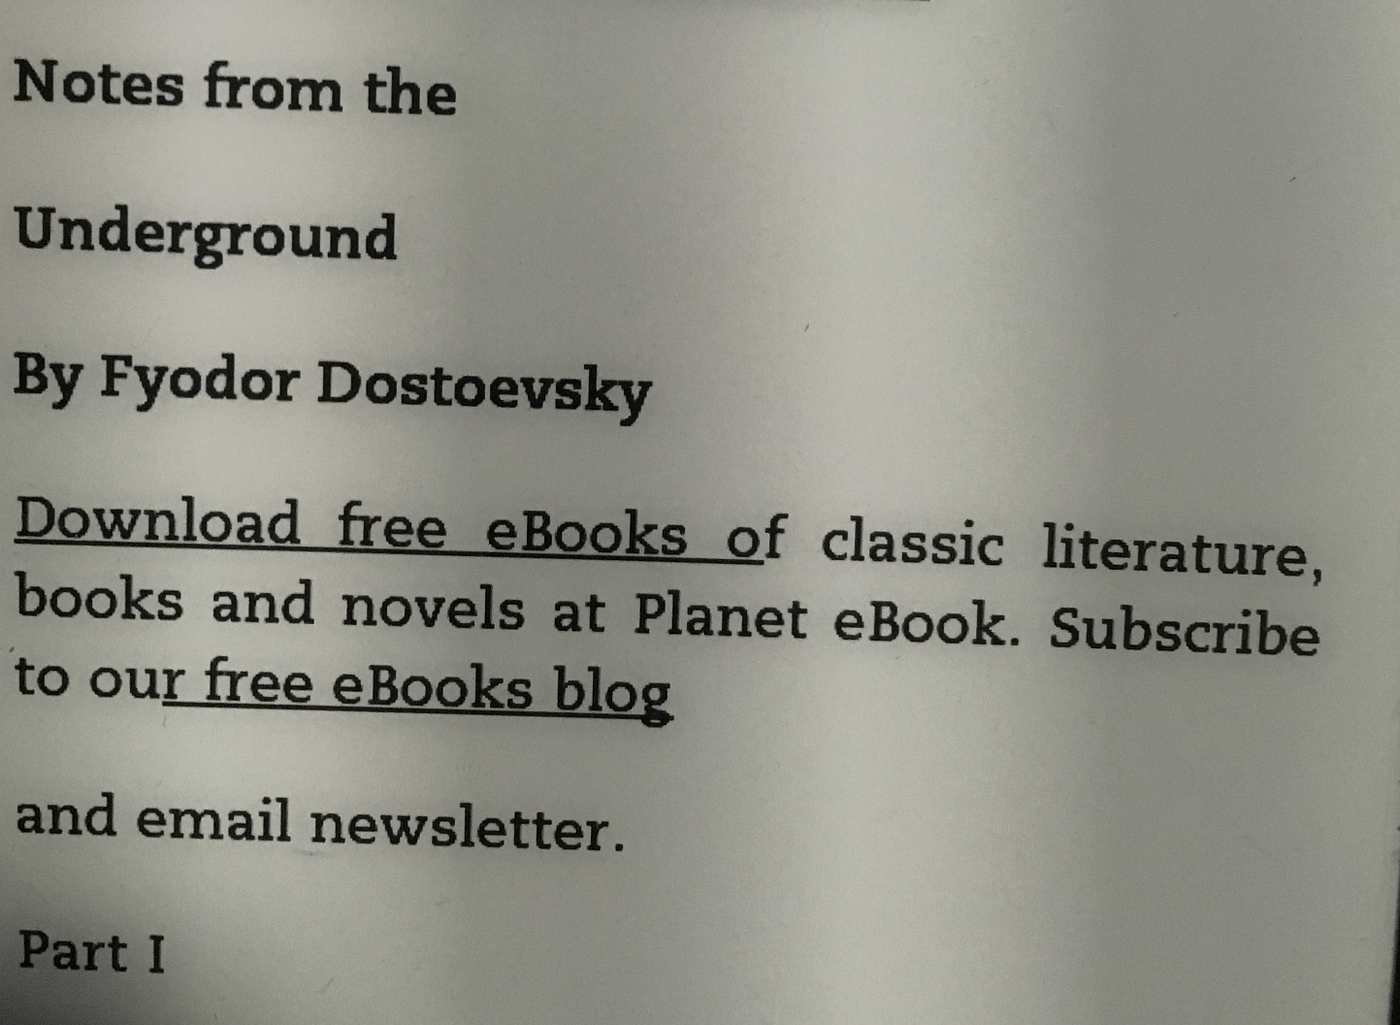 Dostoevsky 2 books Novels and Stories. Soviet Vintage Book